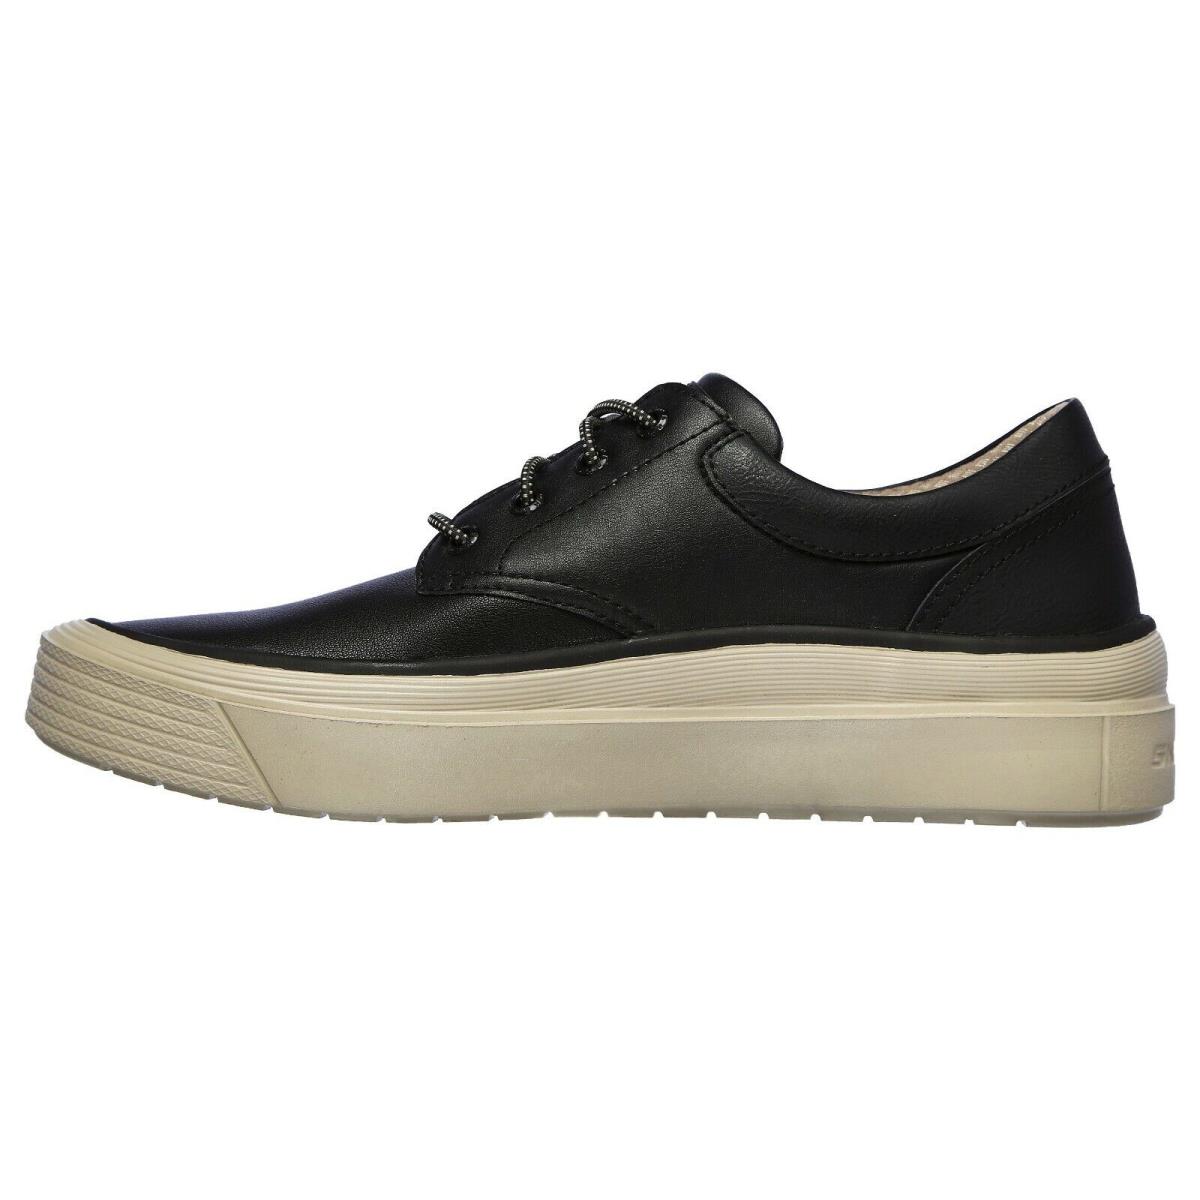 Skechers shoes Viewport Gloren - Black/Natural 2